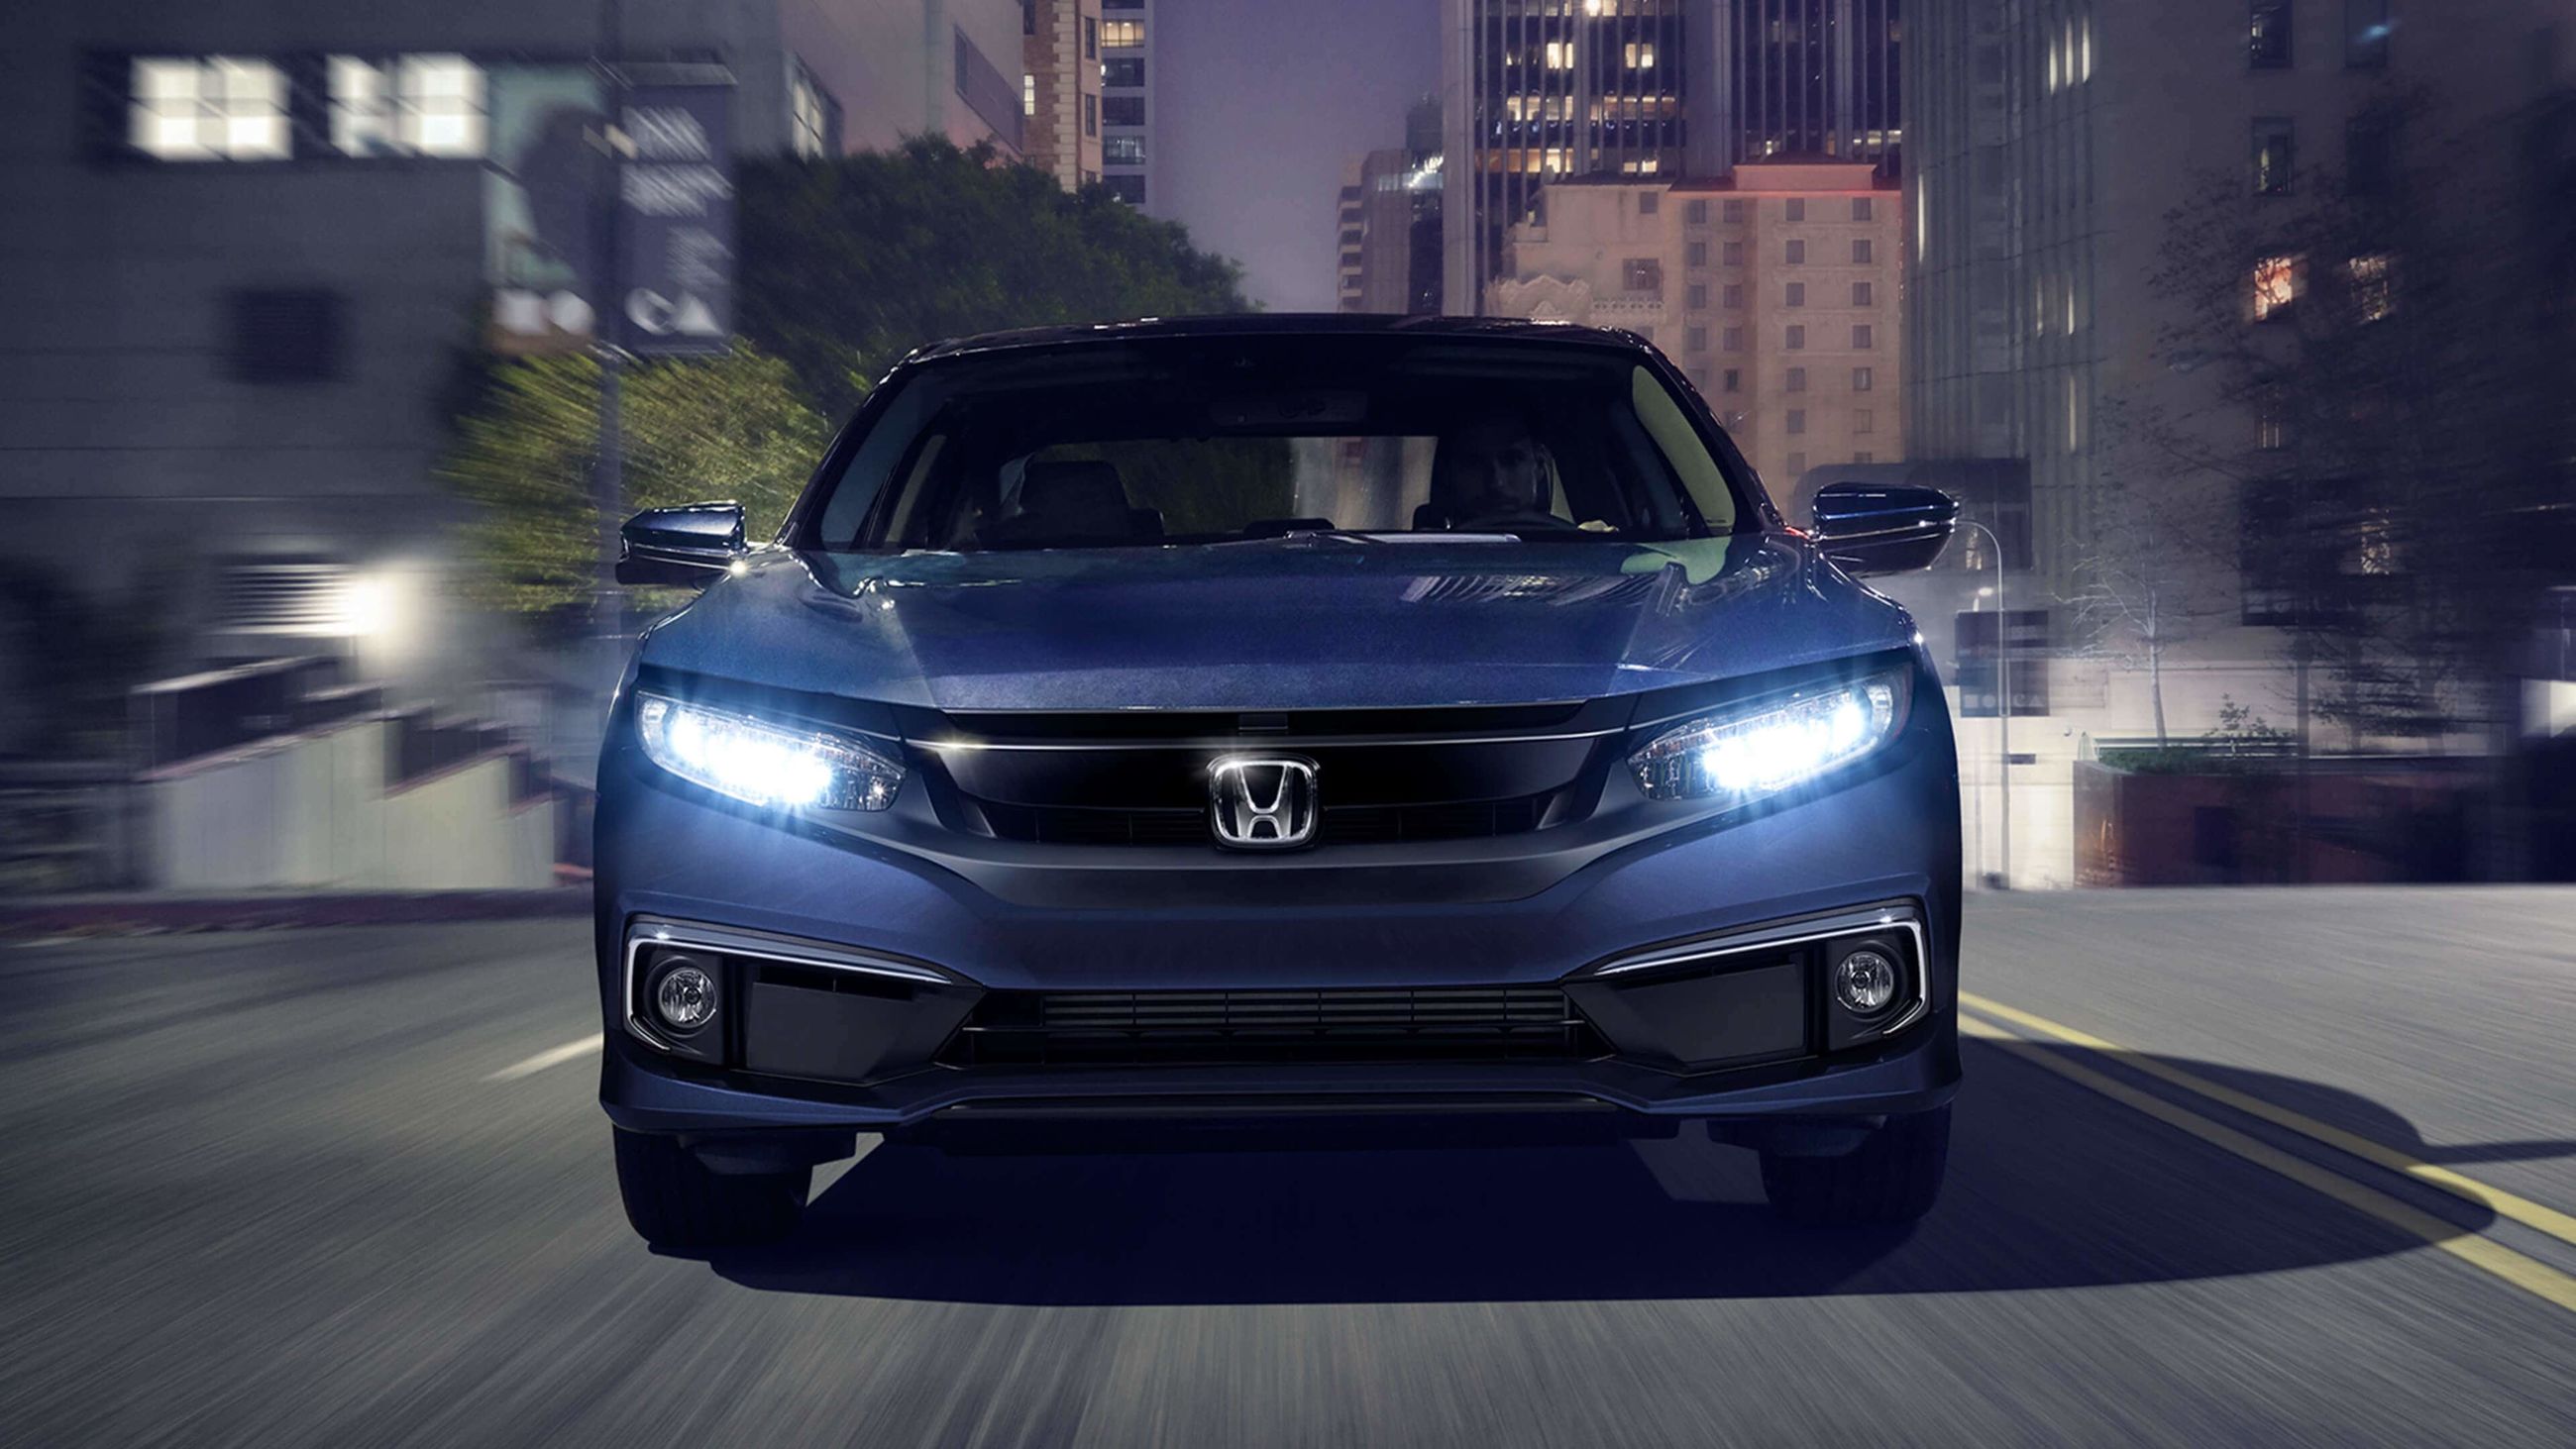 Honda Civic Exterior - Blue